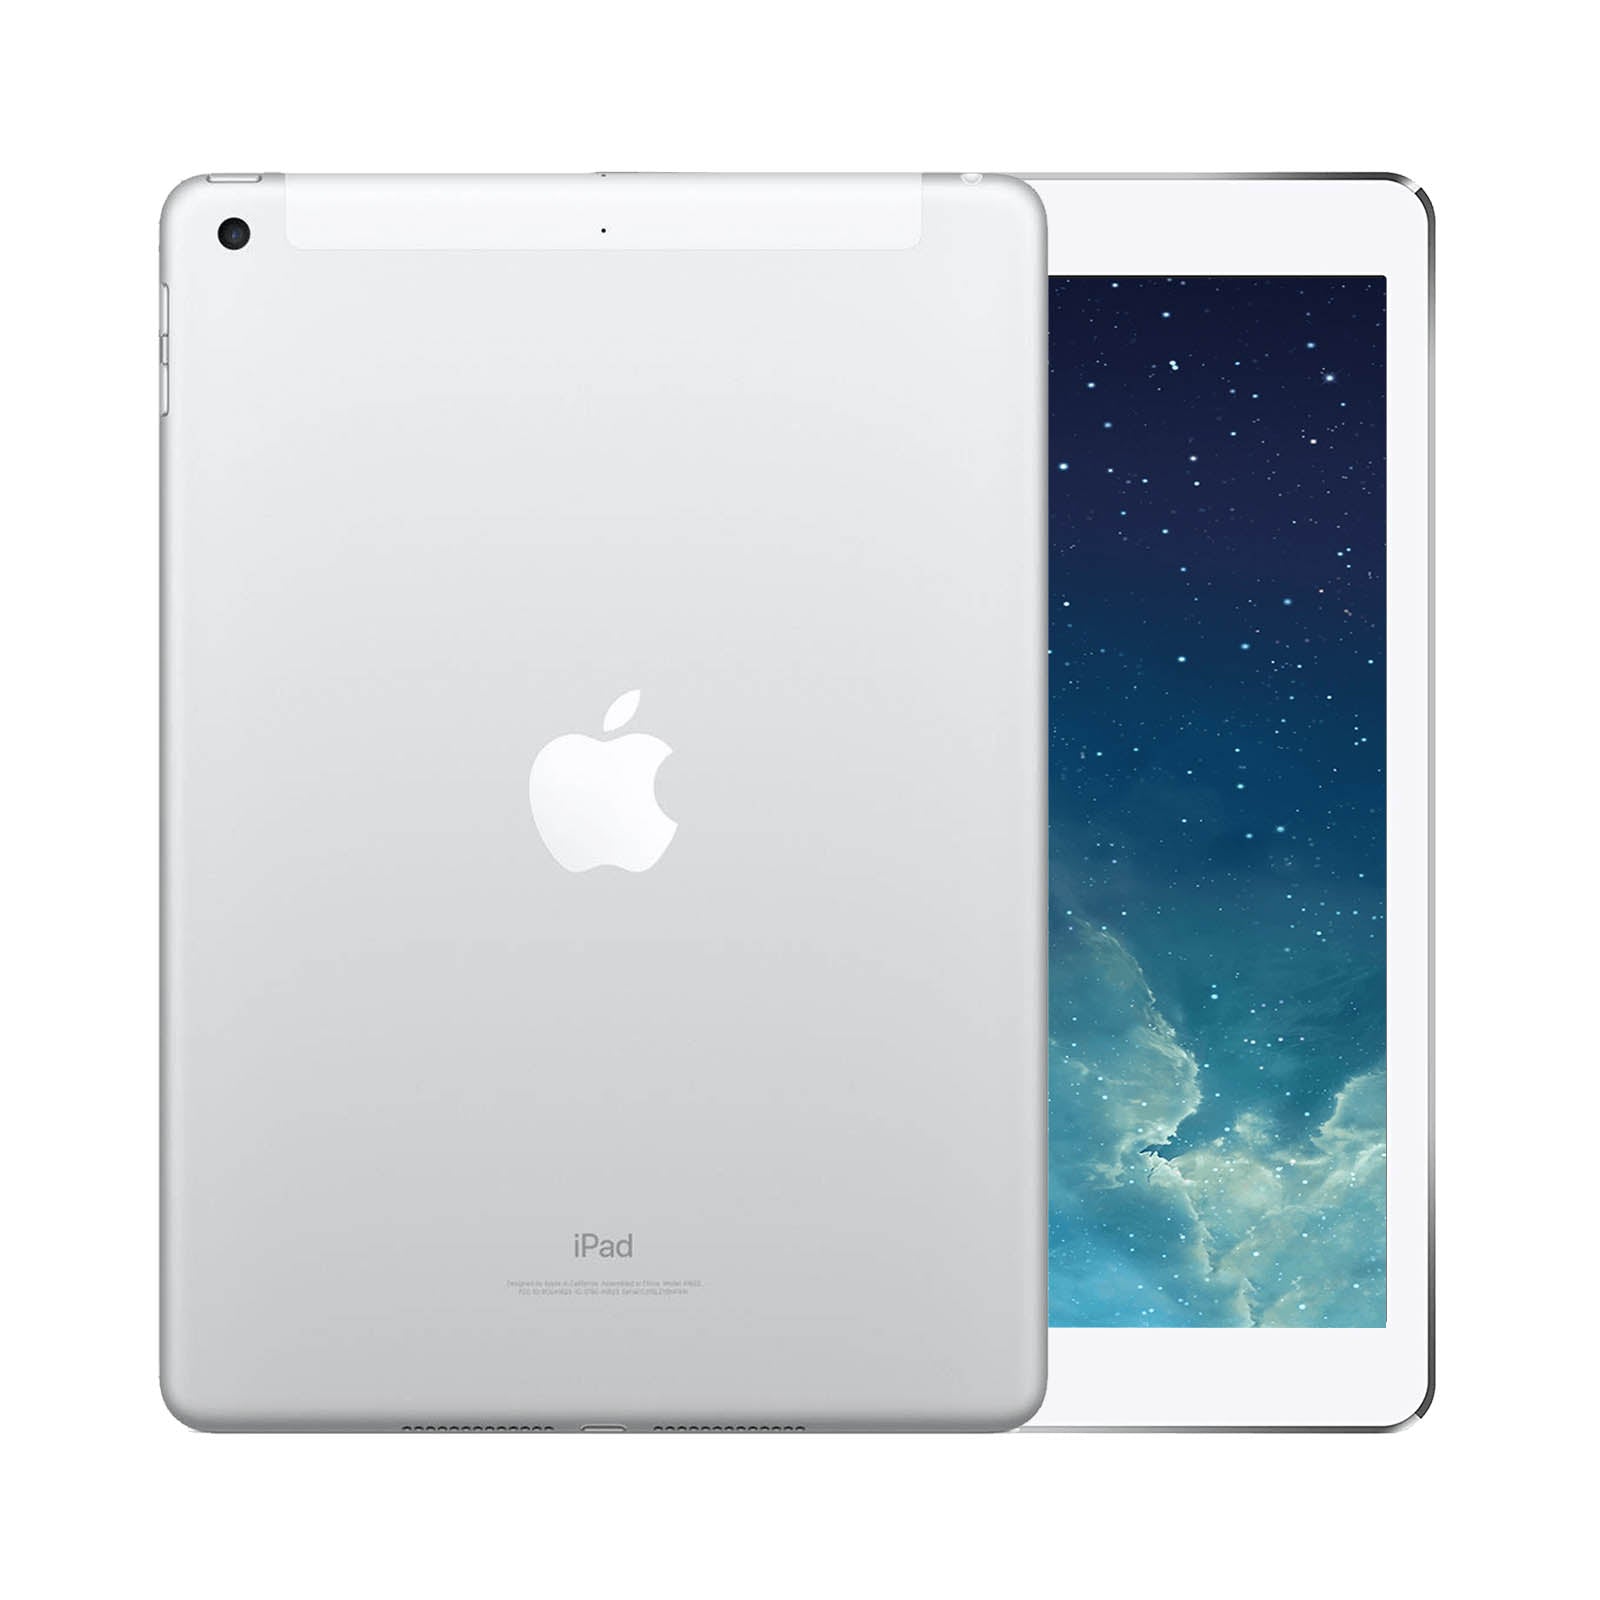 Apple iPad Air 128GB Silver Good - Unlocked